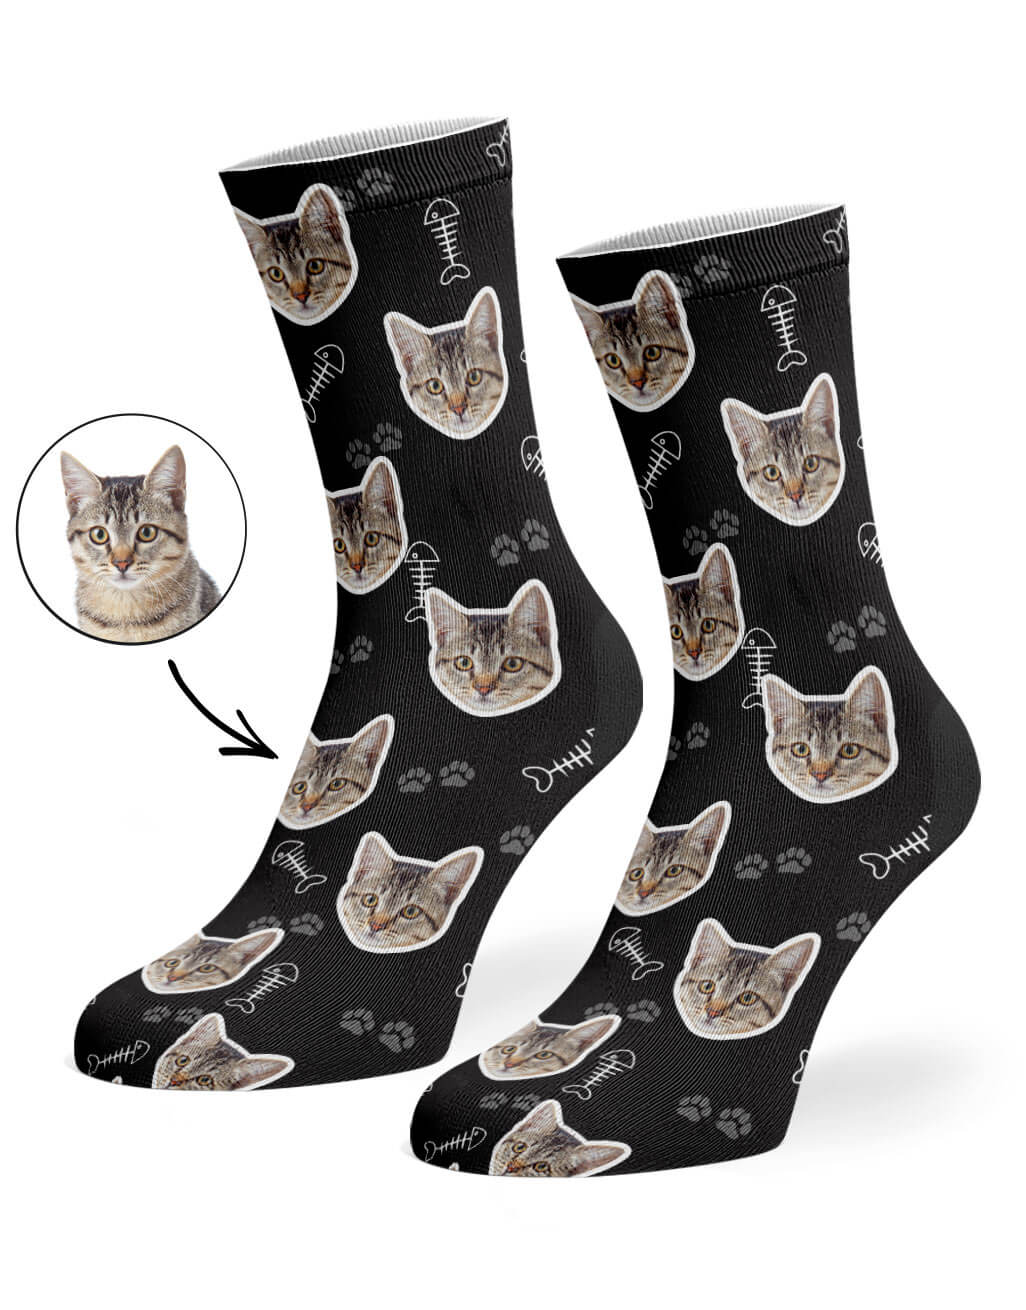 Black Your Cat On Socks